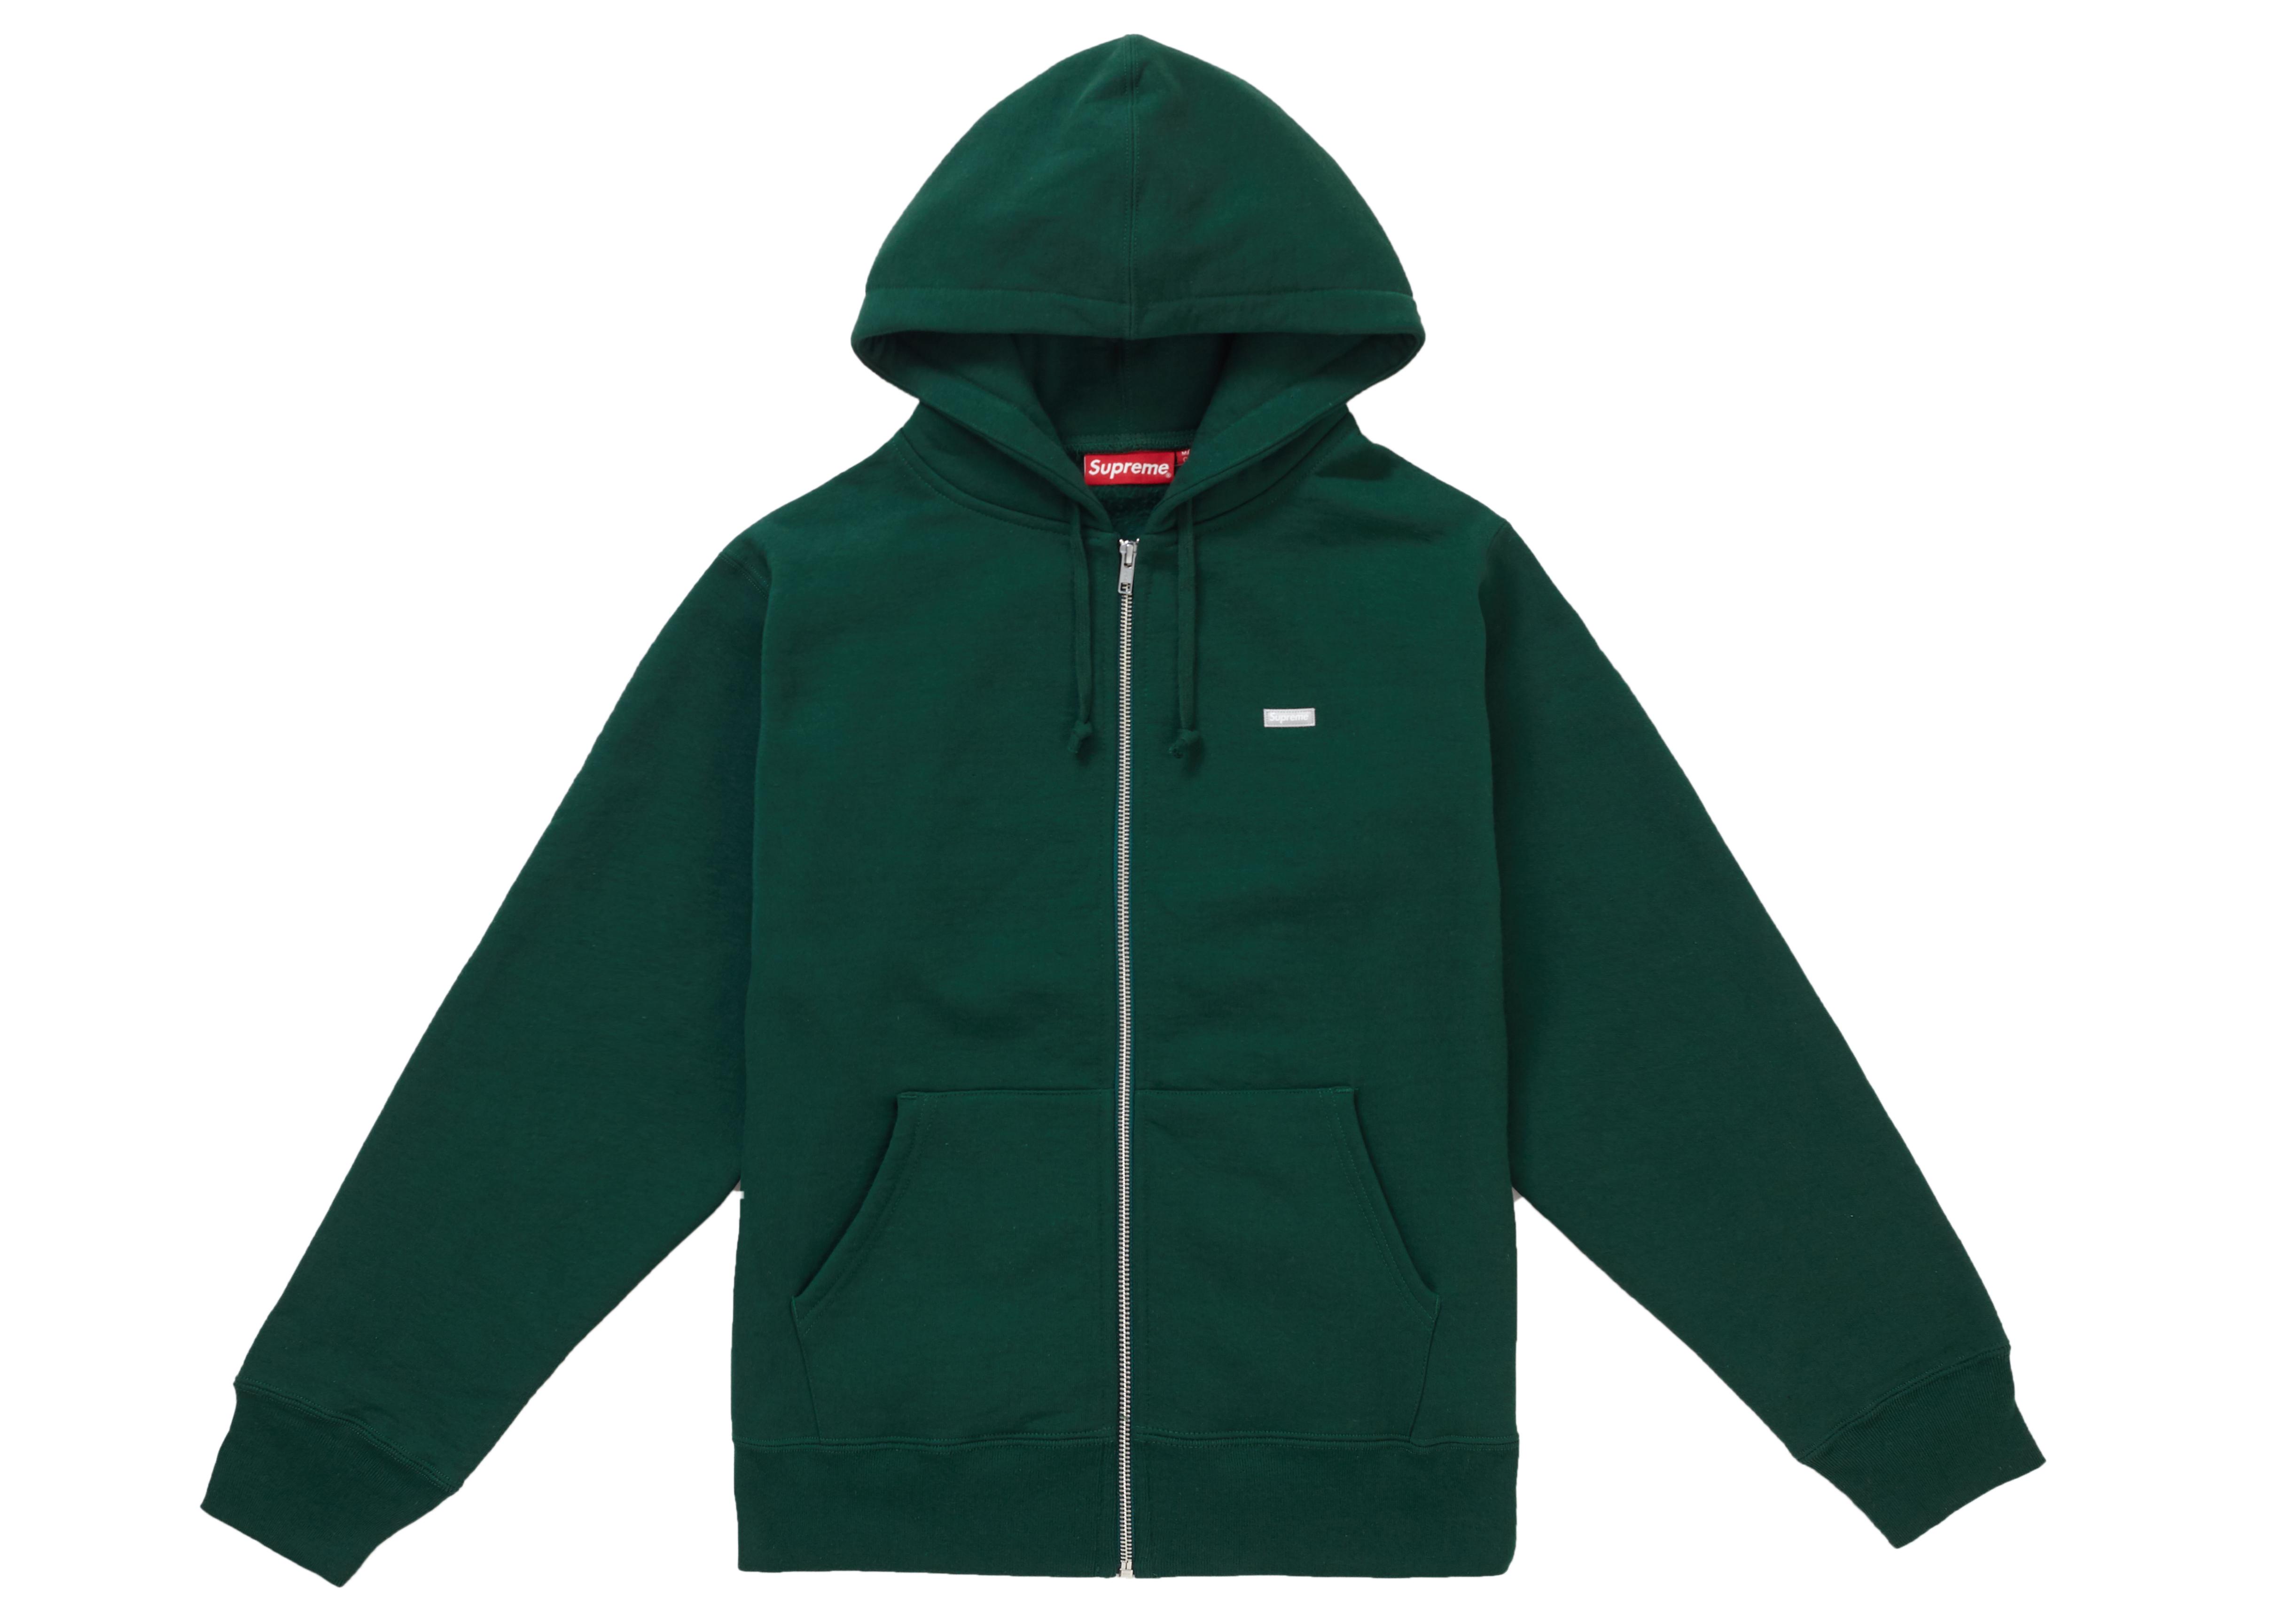 Supreme Reflective Small Box Zip Up Sweatshirt Dark Green for Men - Lyst